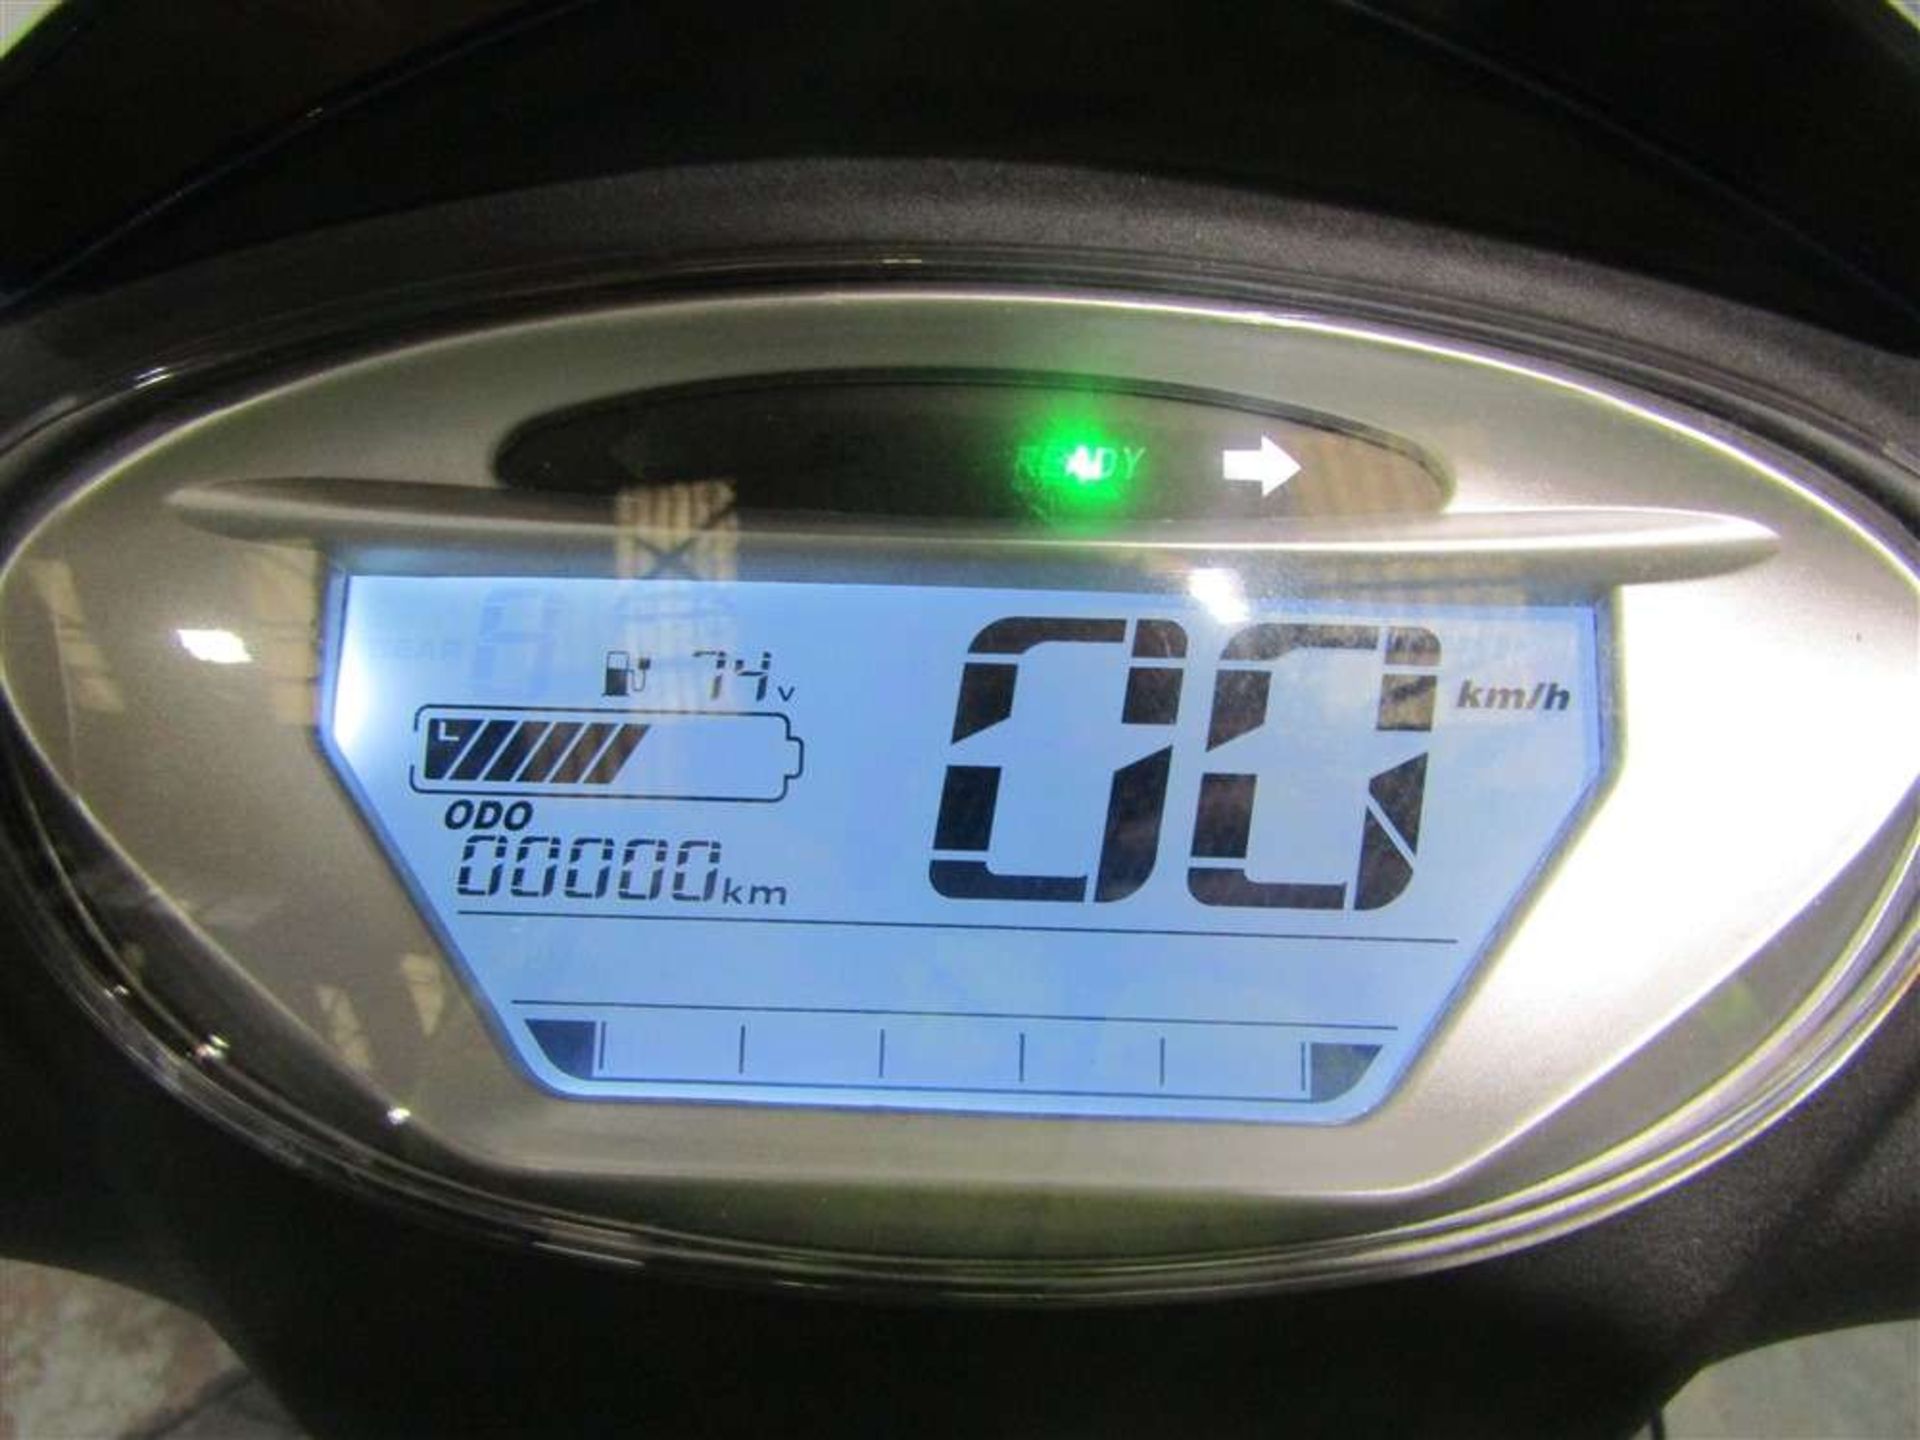 Efun Erider 5000W Electric Motorbike - Image 5 of 5